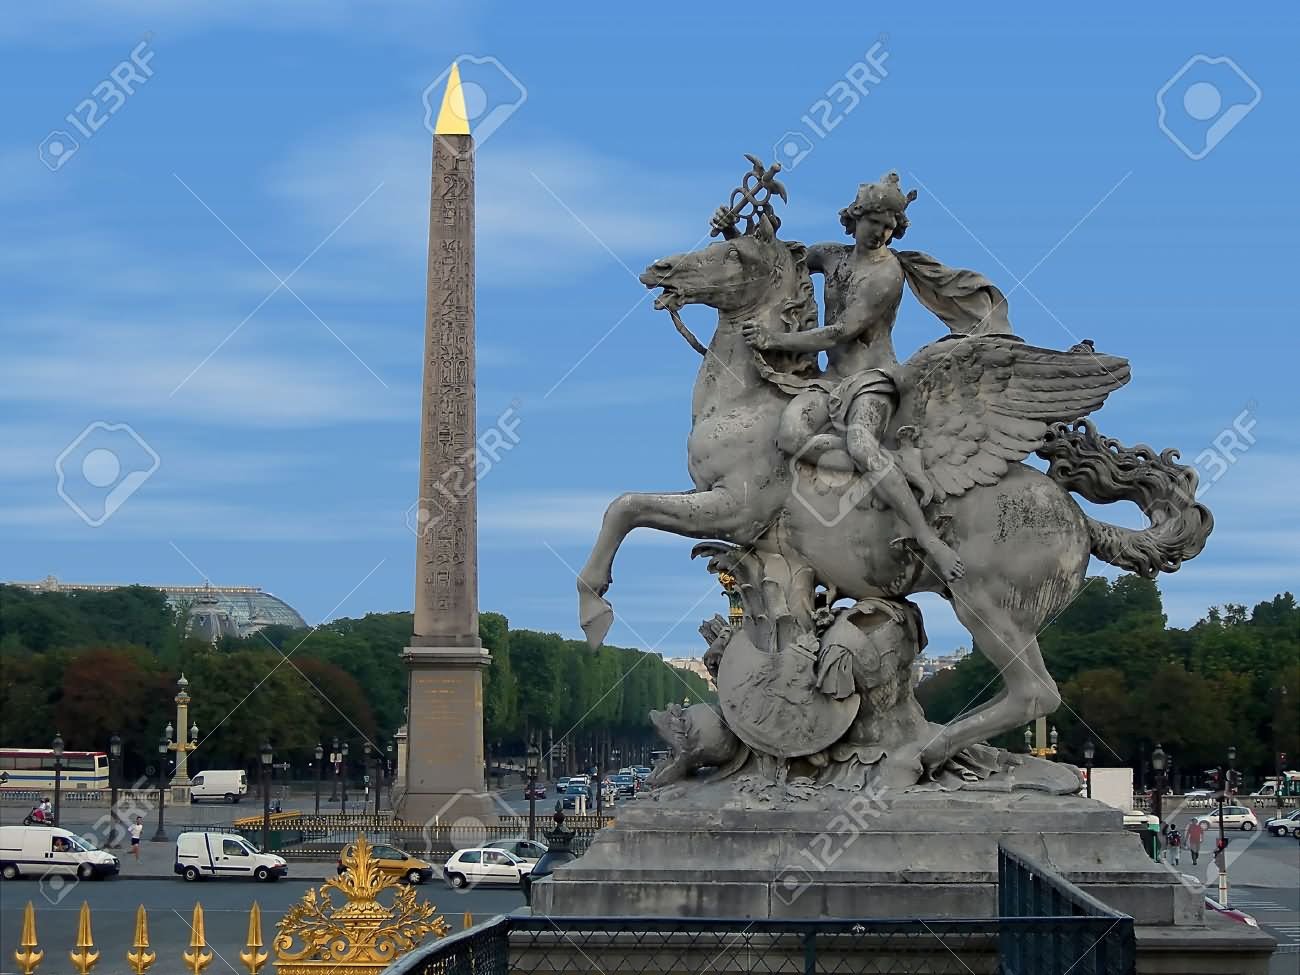 Statue Of Perseus And Obelisk On Place de la Concorde